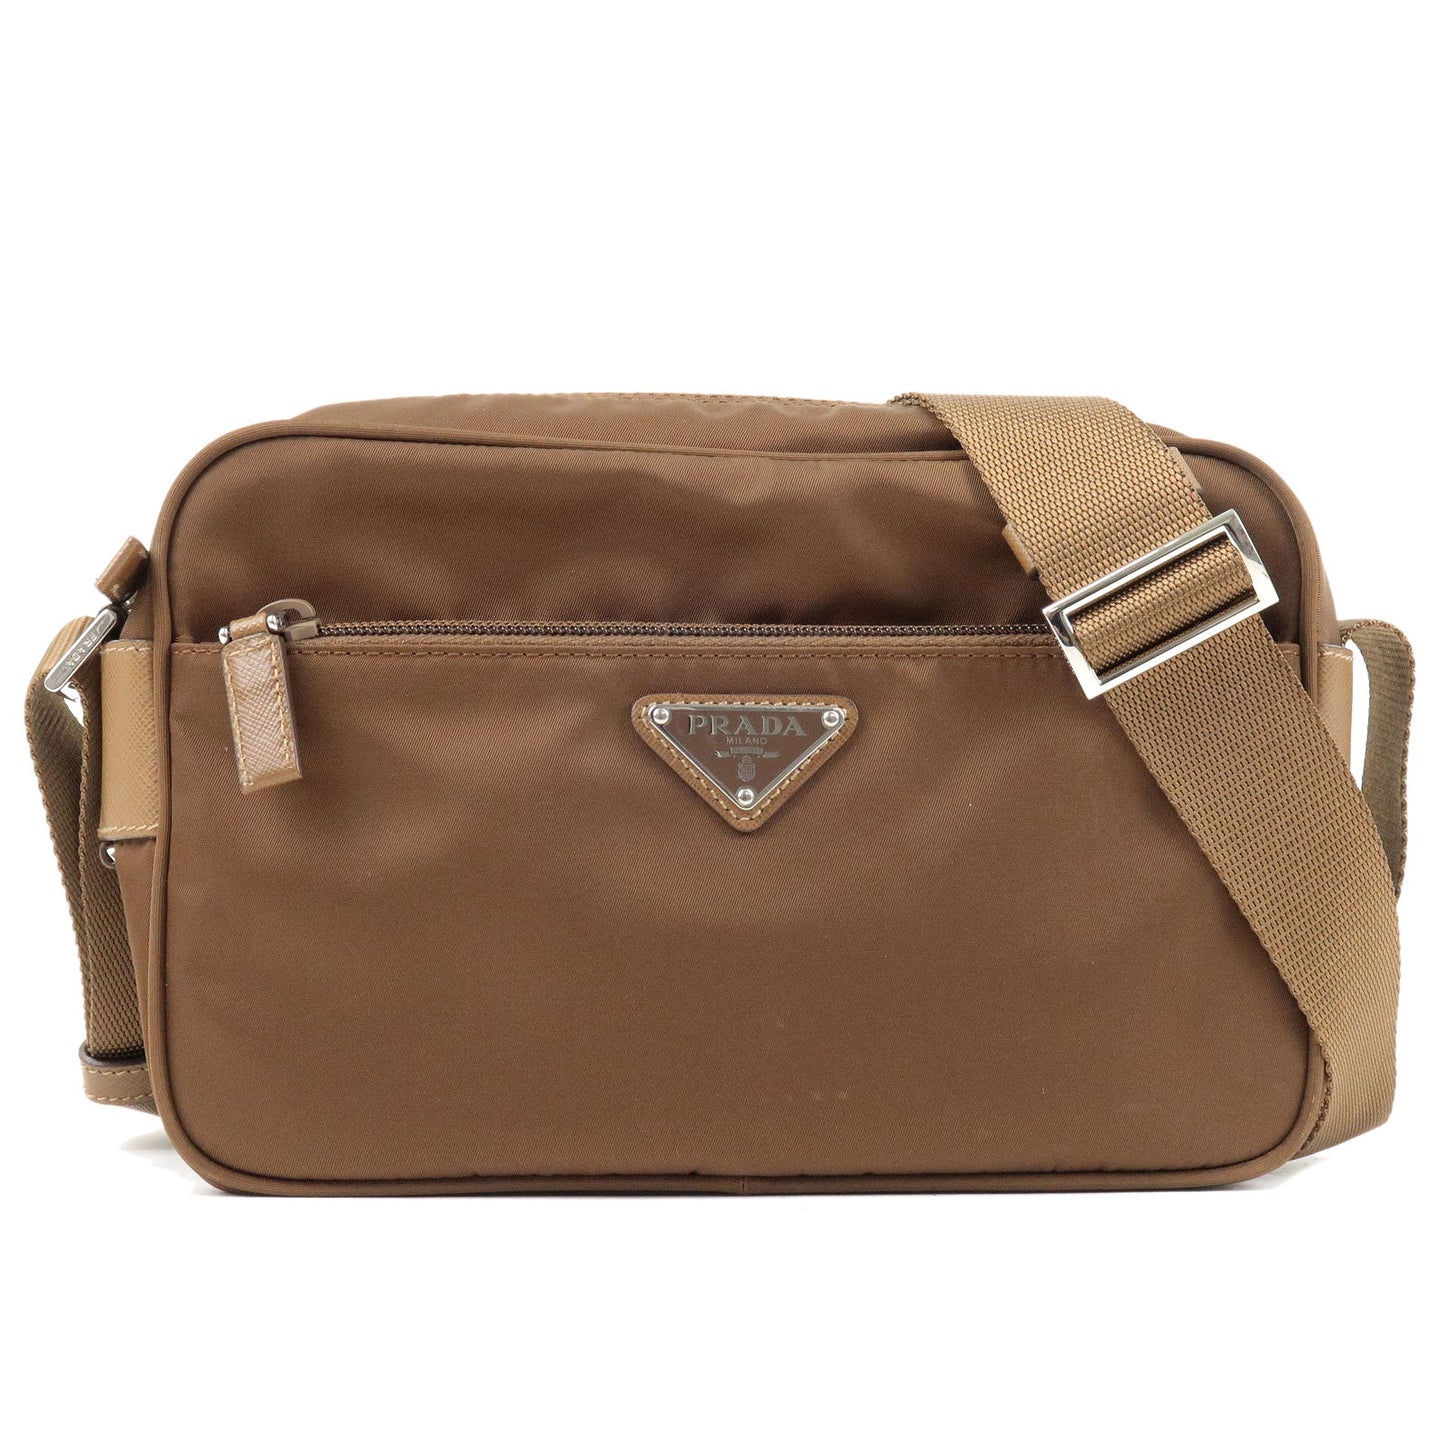 PRADA-Logo-Nylon-Leather-Shoulder-Bag-Crossbody-Bag-Brown-1BC167